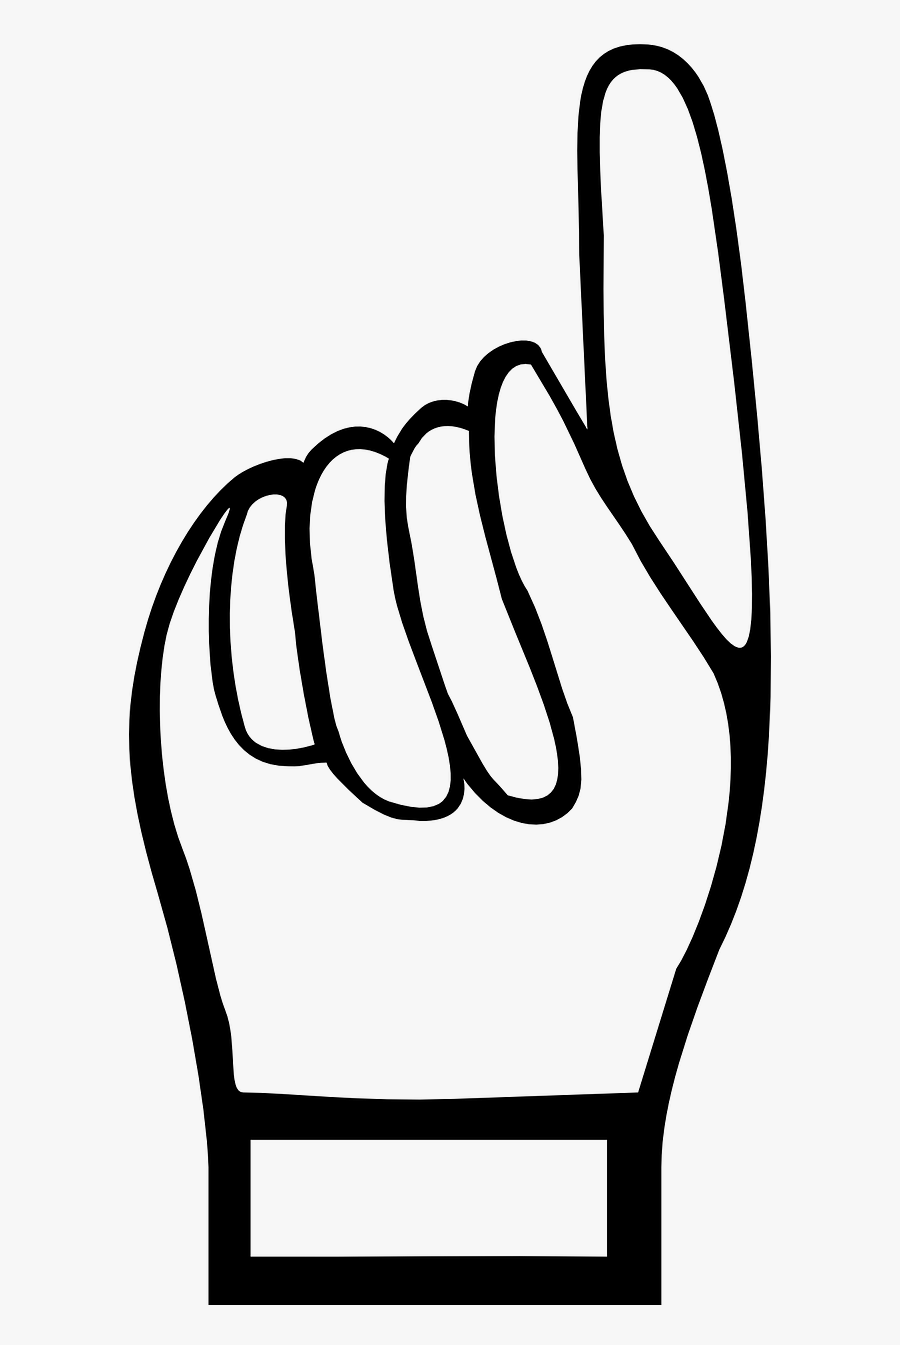 Index Finger Pointing Pointer - Pointer Finger Clipart, Transparent Clipart